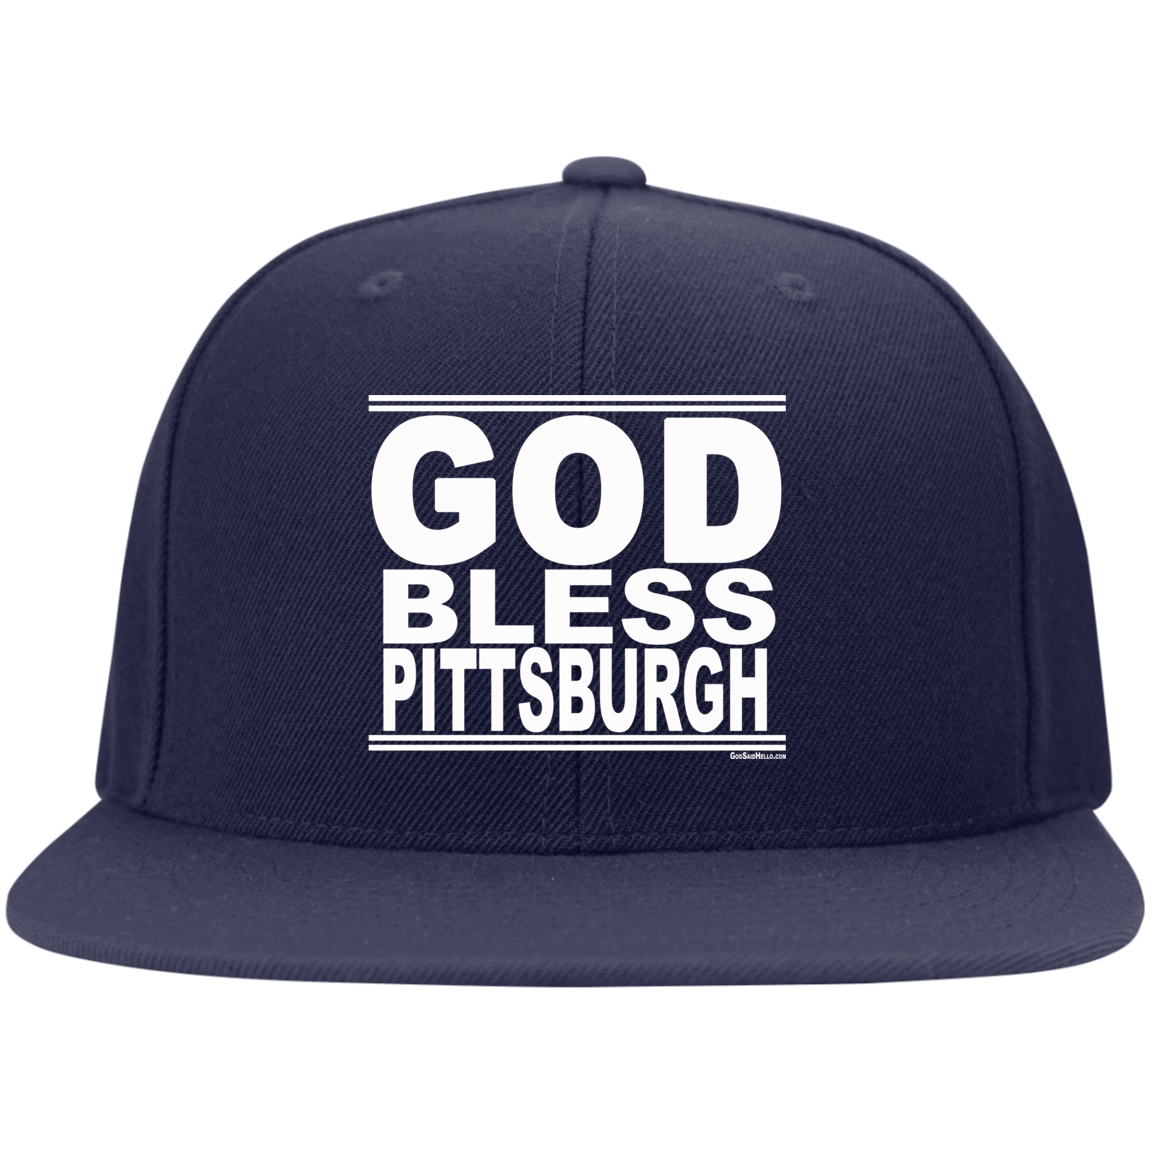 #GodBlessPittsburgh - Snapback Hat